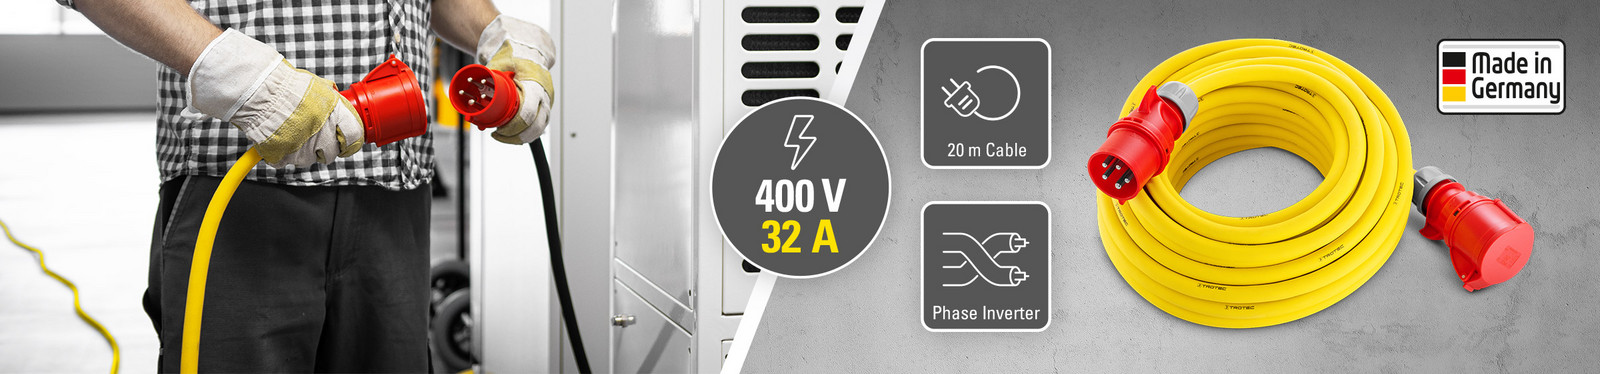 Profi hosszabbítókábel 400 V (32 A) – Made in Germany